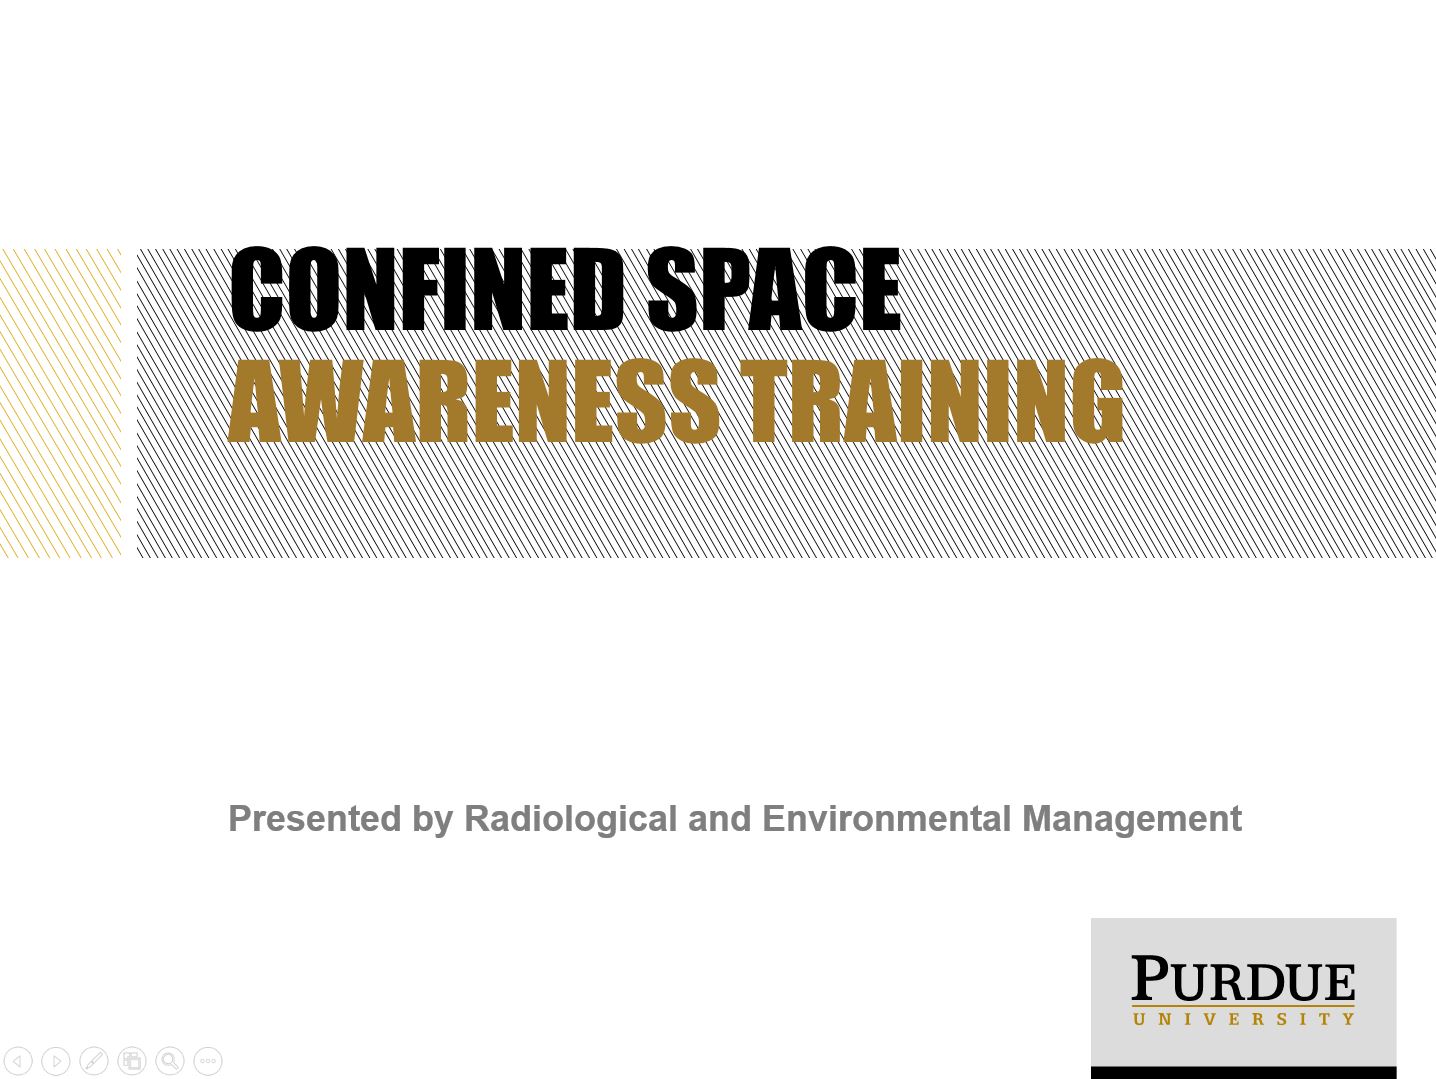 https://www.purdue.edu/ehps/rem/training/training%20images/confined%20space%20awareness.JPG